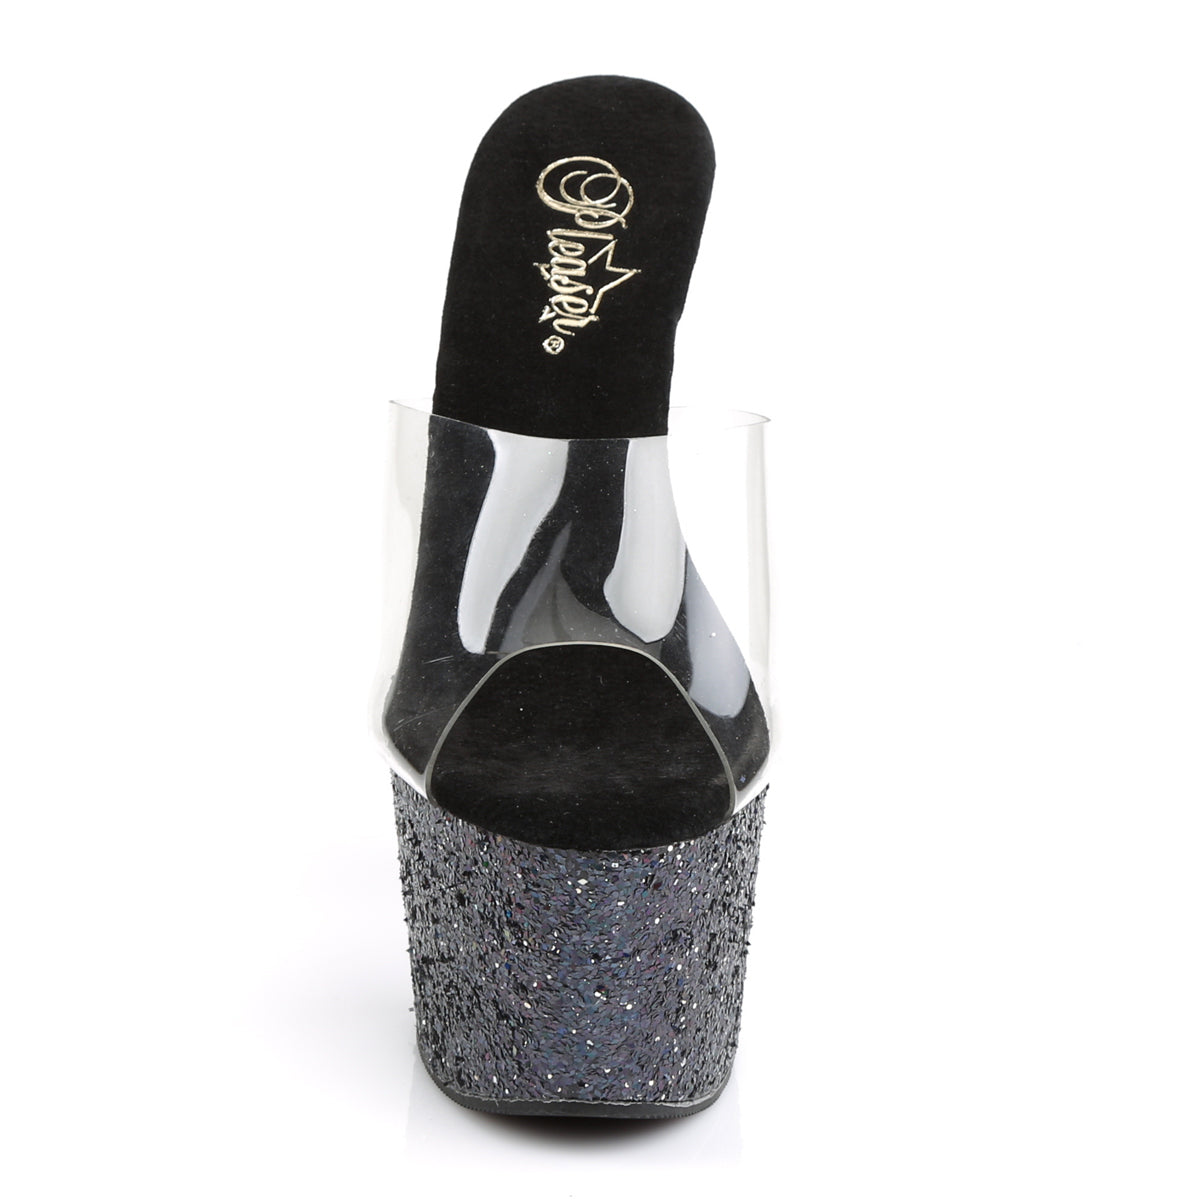 Pleaser Womens Sandals ADORE-701LG Clr/Blk Holo Glitter